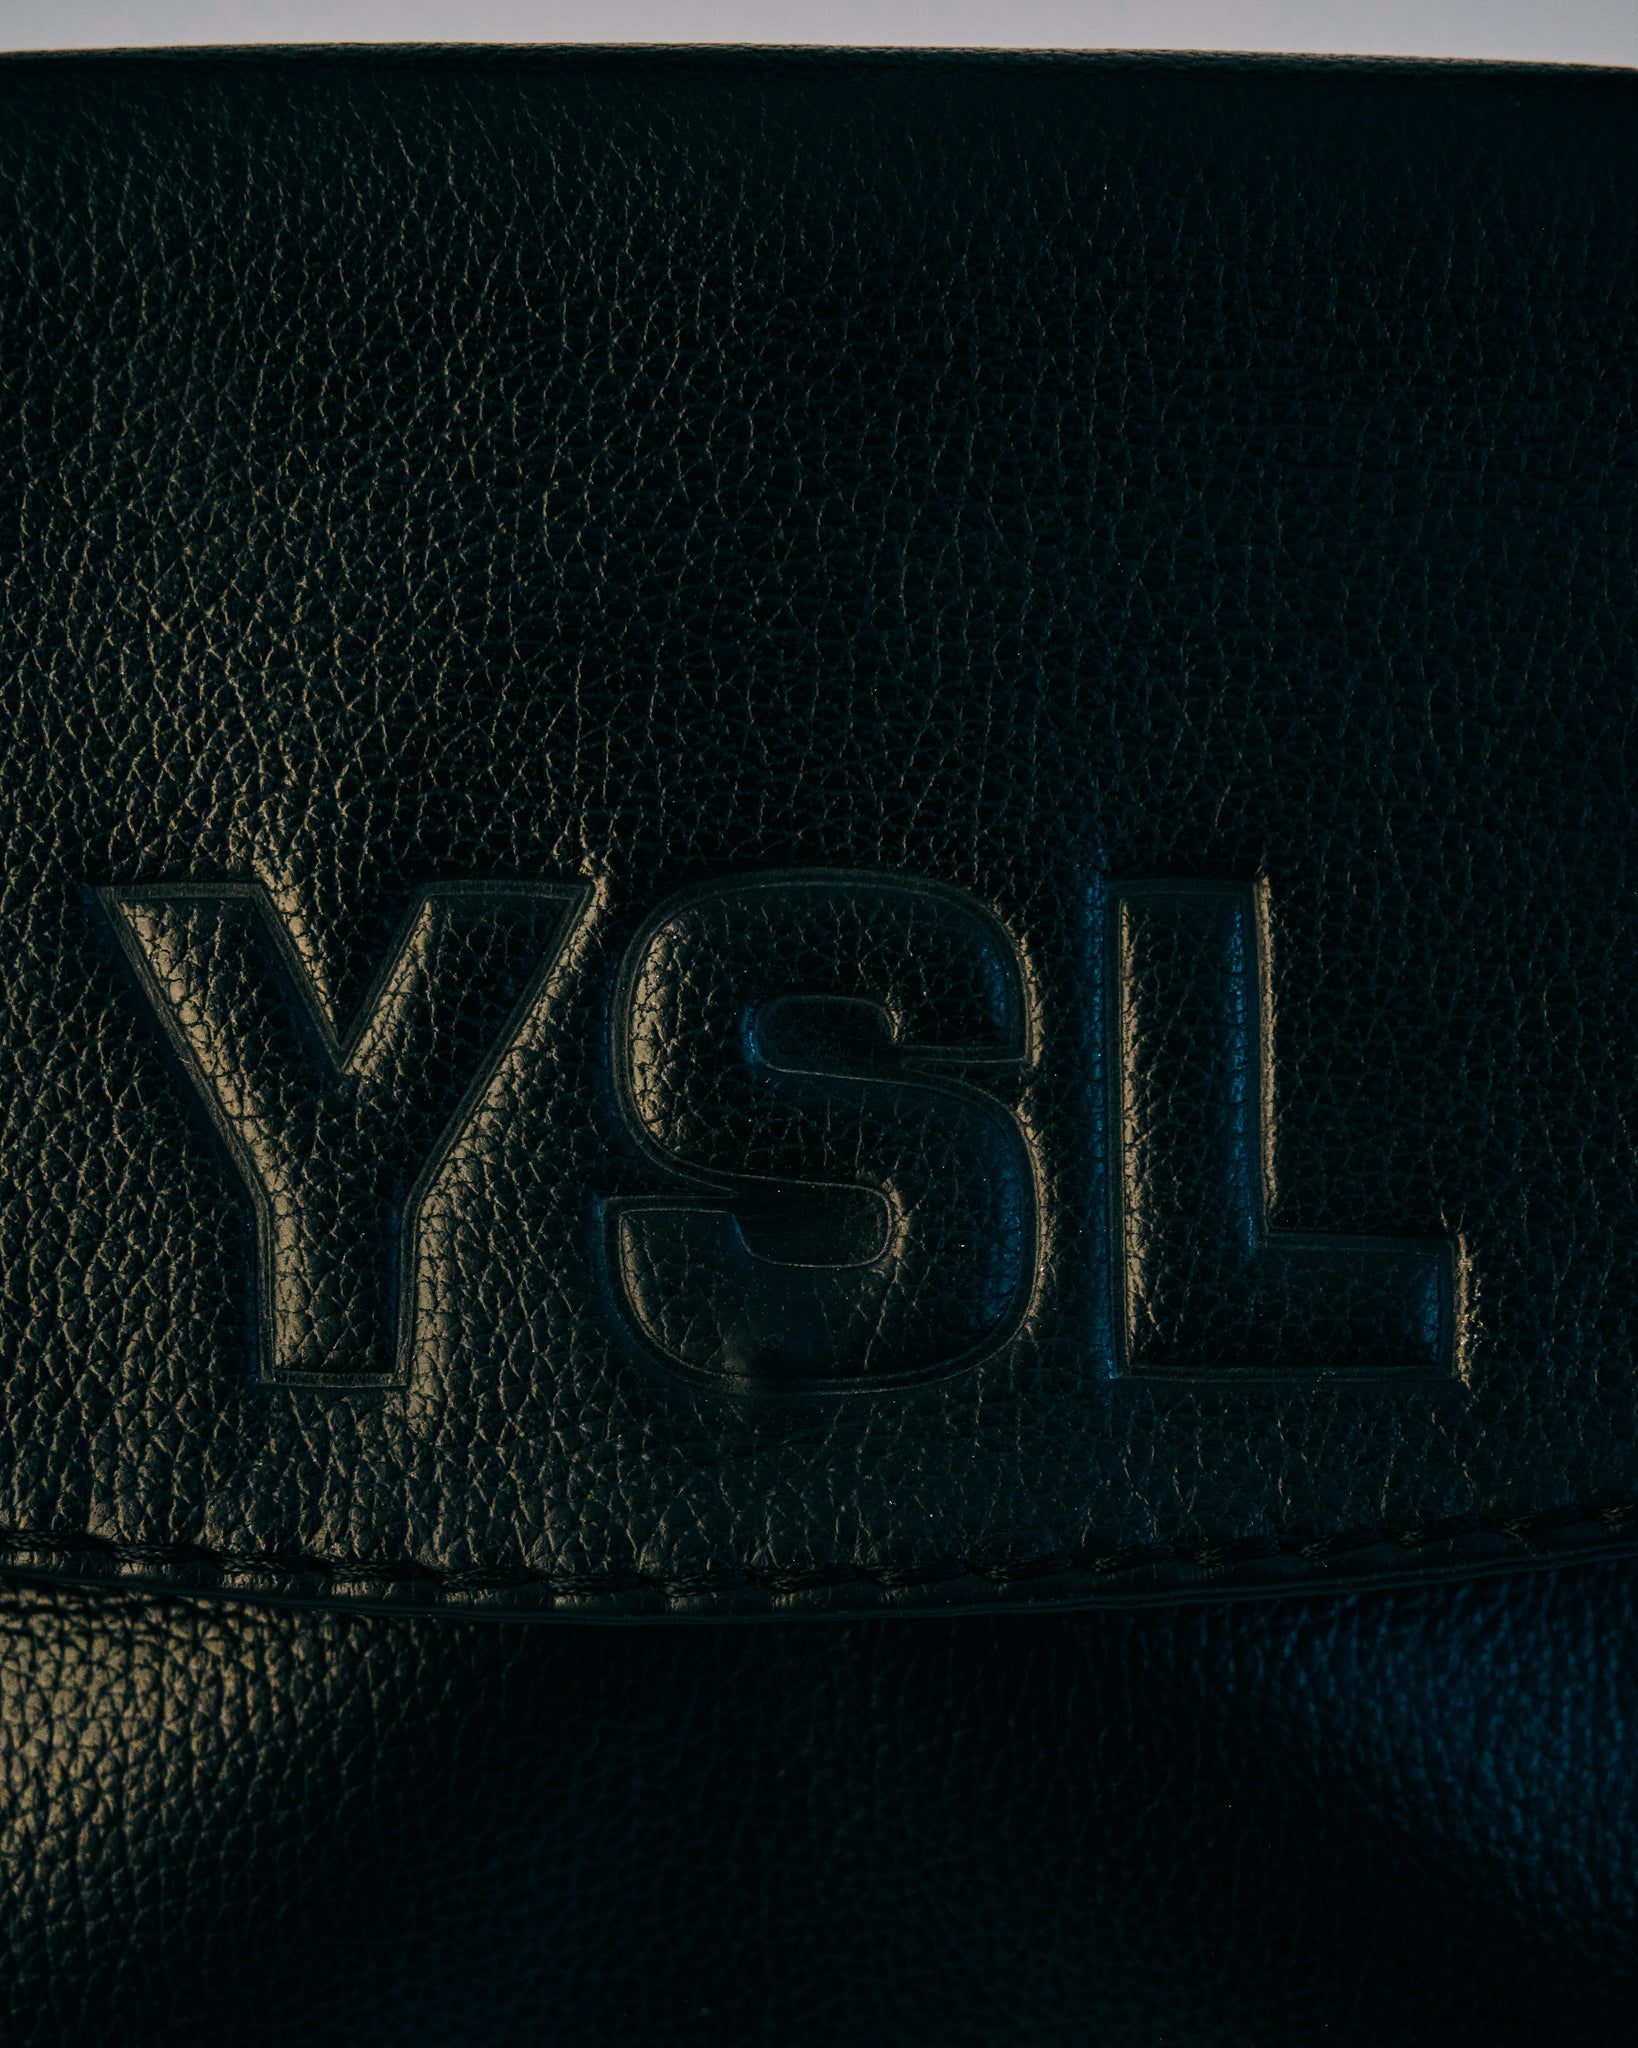 Yves Saint Laurent Vintage Tasche